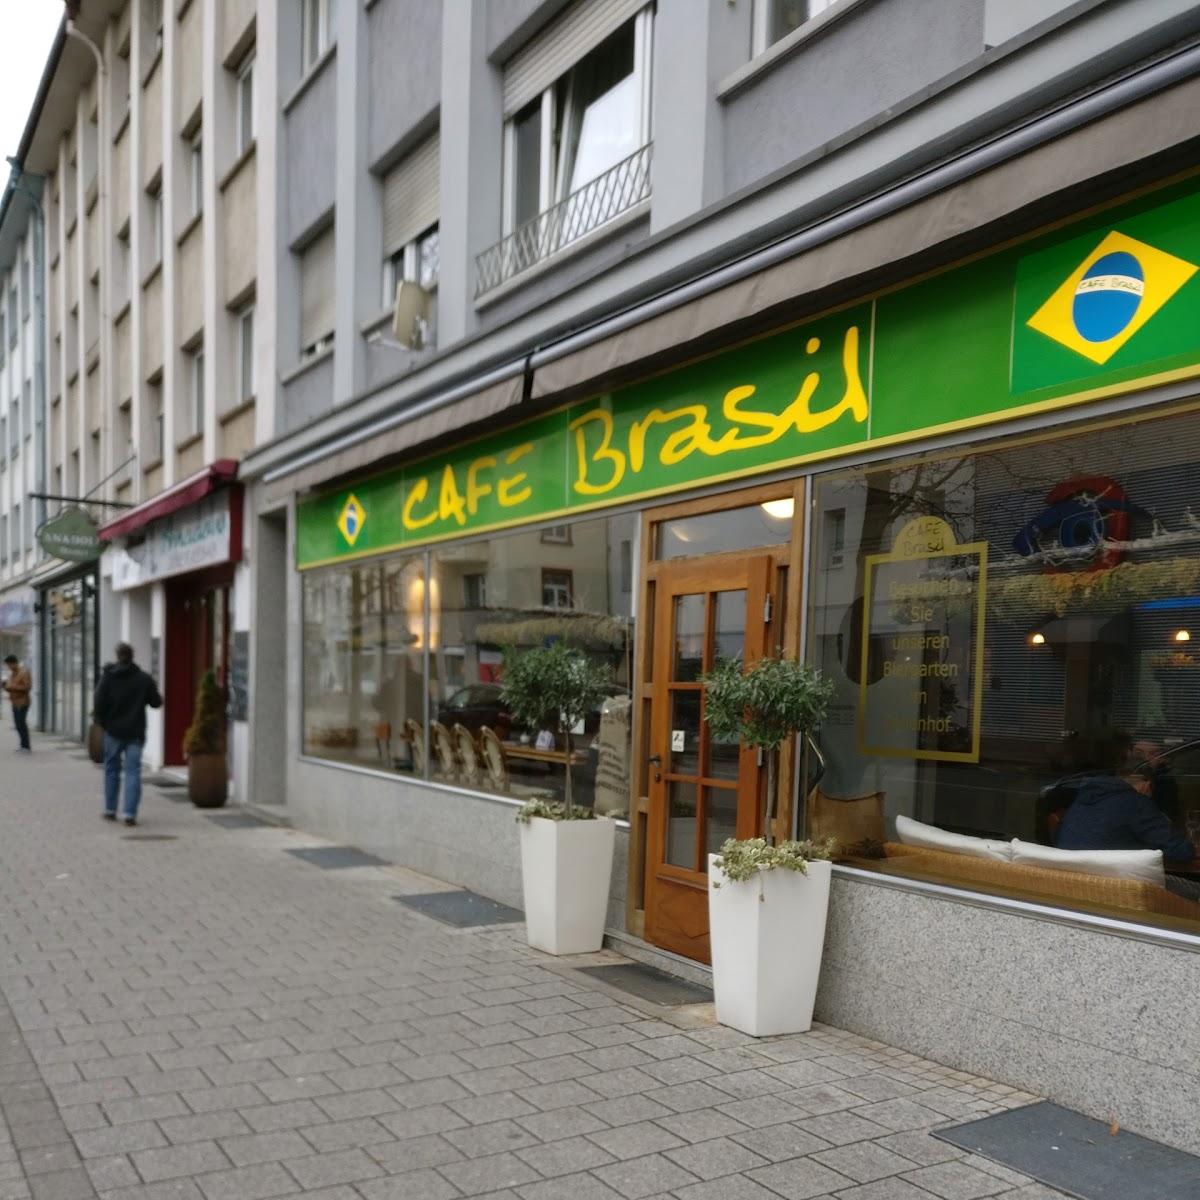 Restaurant "Café Brasil" in Bruchsal